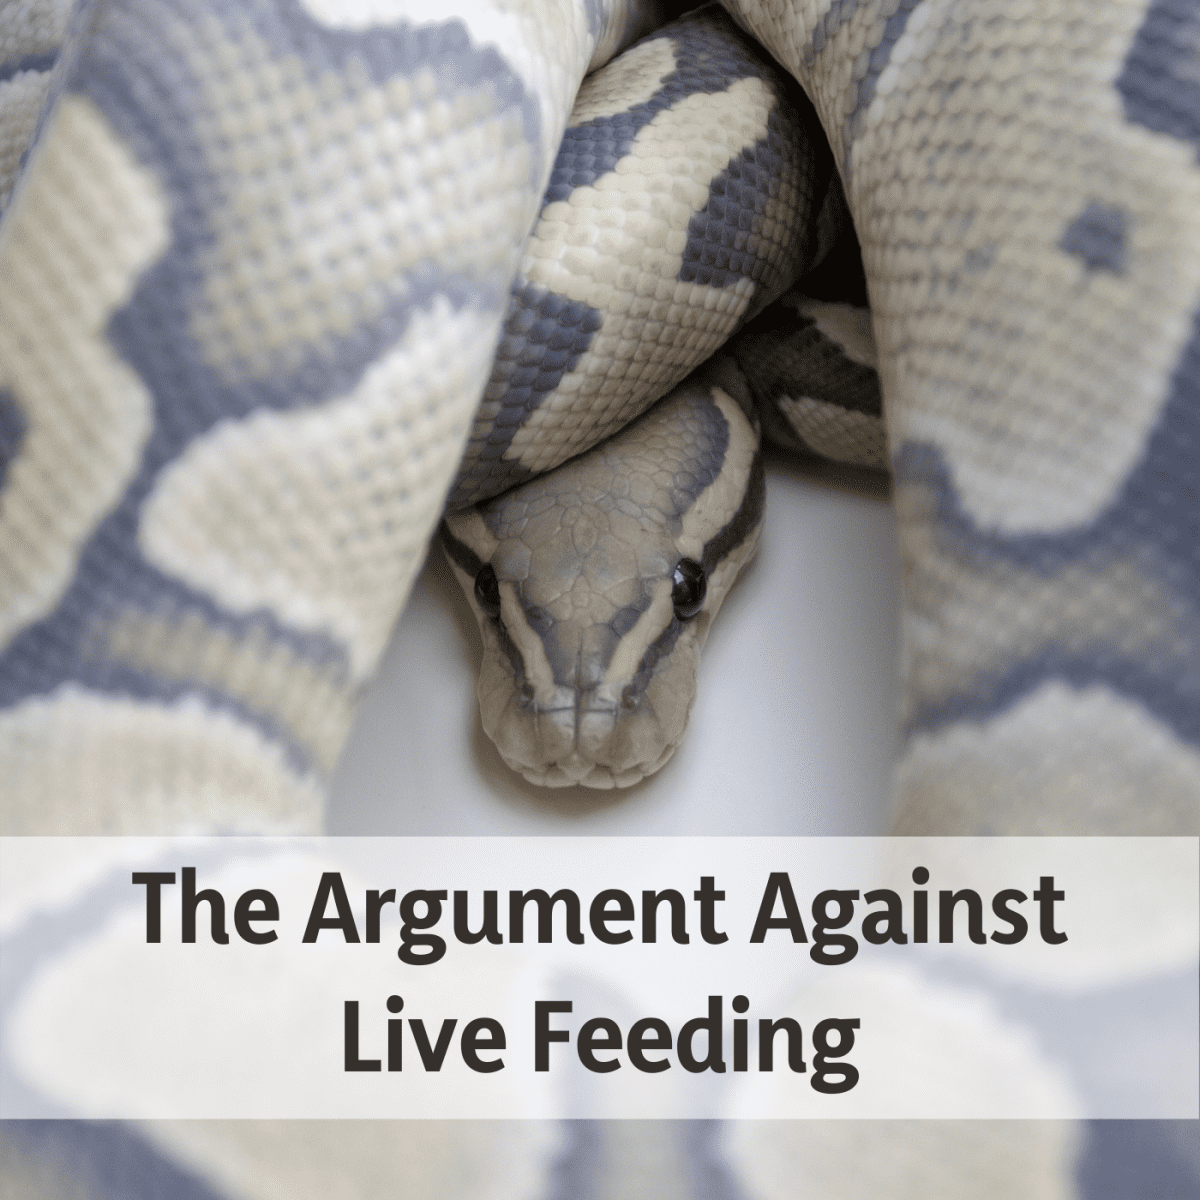 Feeding Pets Live Food Is Cruelty - PetHelpful